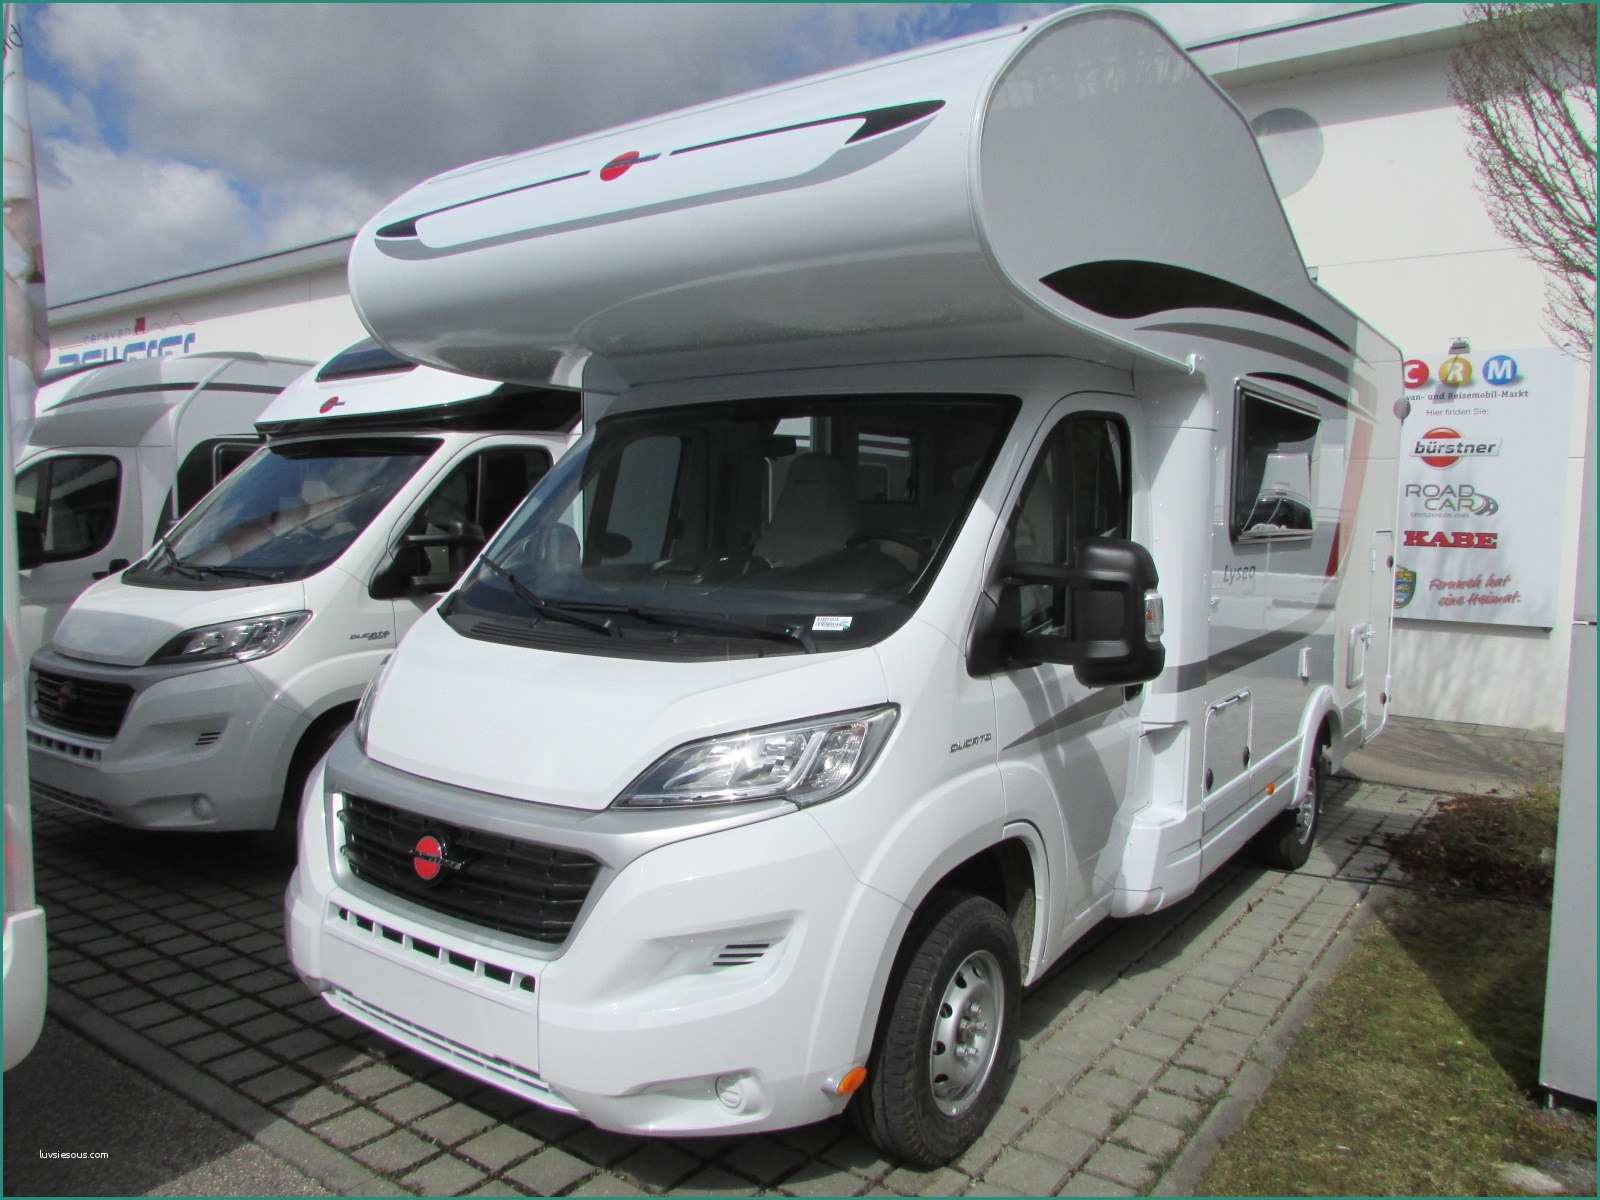 Iveco Daily X Camper Usato E Camper Caravan Motor Caravan Alcova Integrato